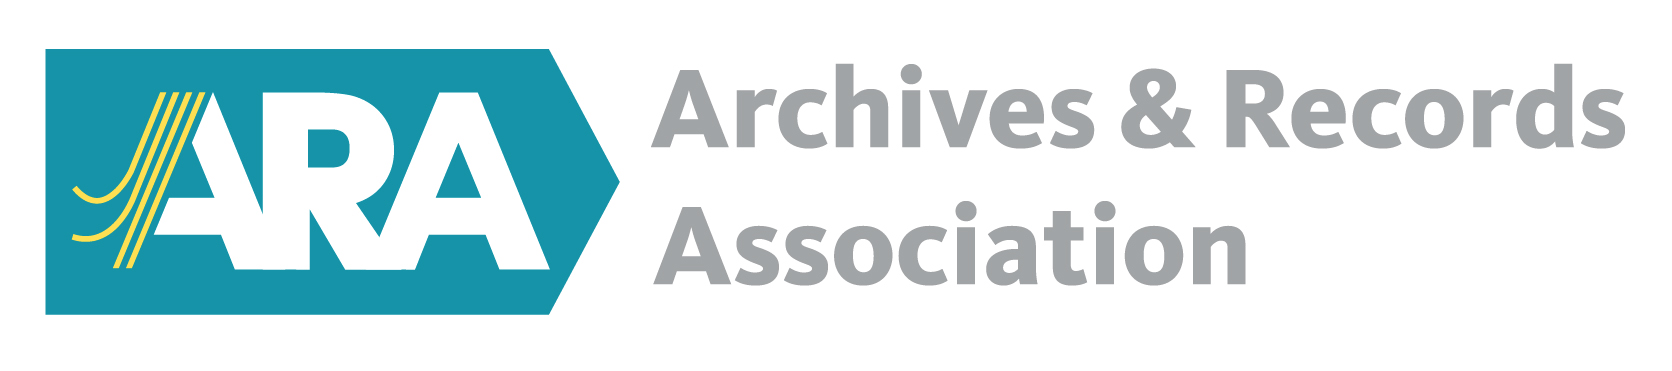 ARA Professional Registration Programme logo